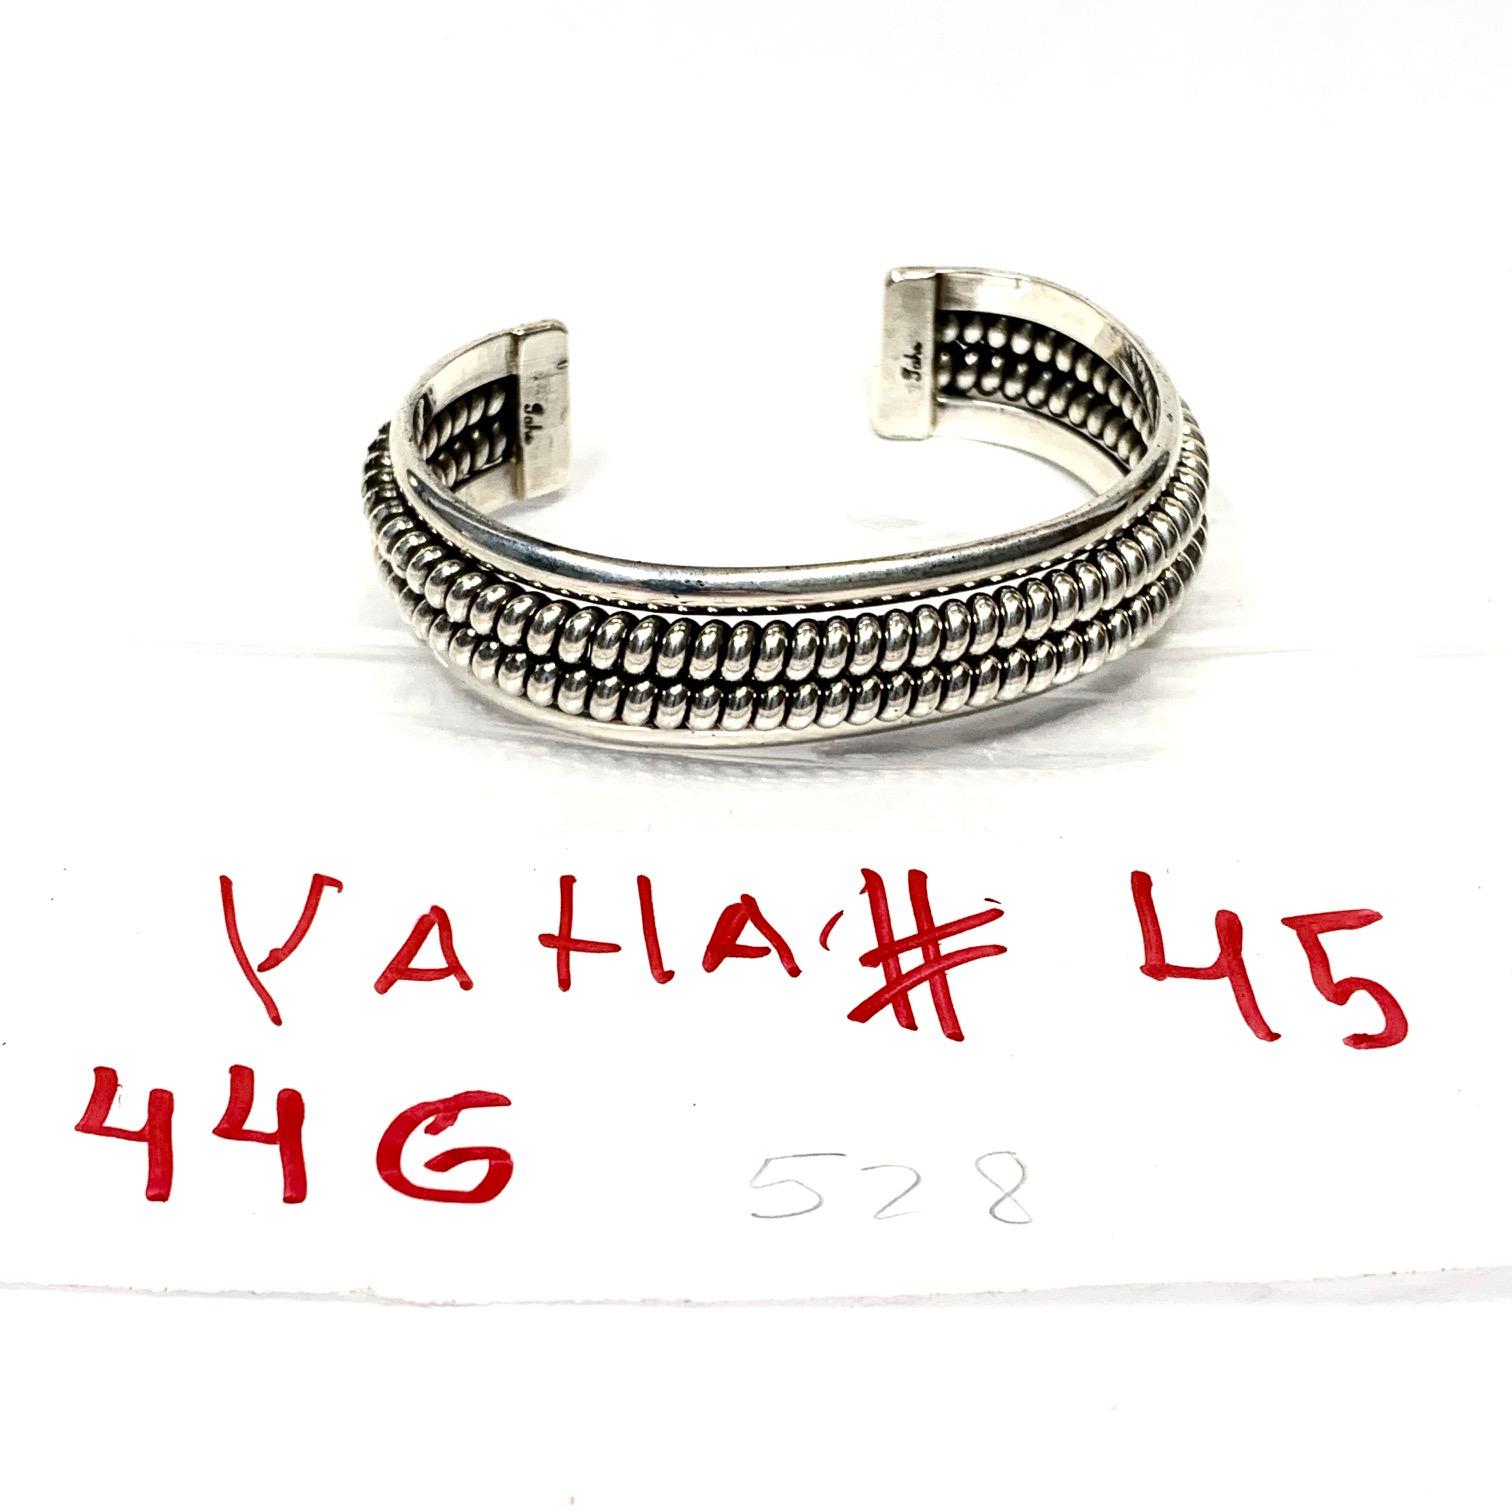 Navajo Sterling Silver 44 Gr. Cuff Bracelet By YAHA PS45 1